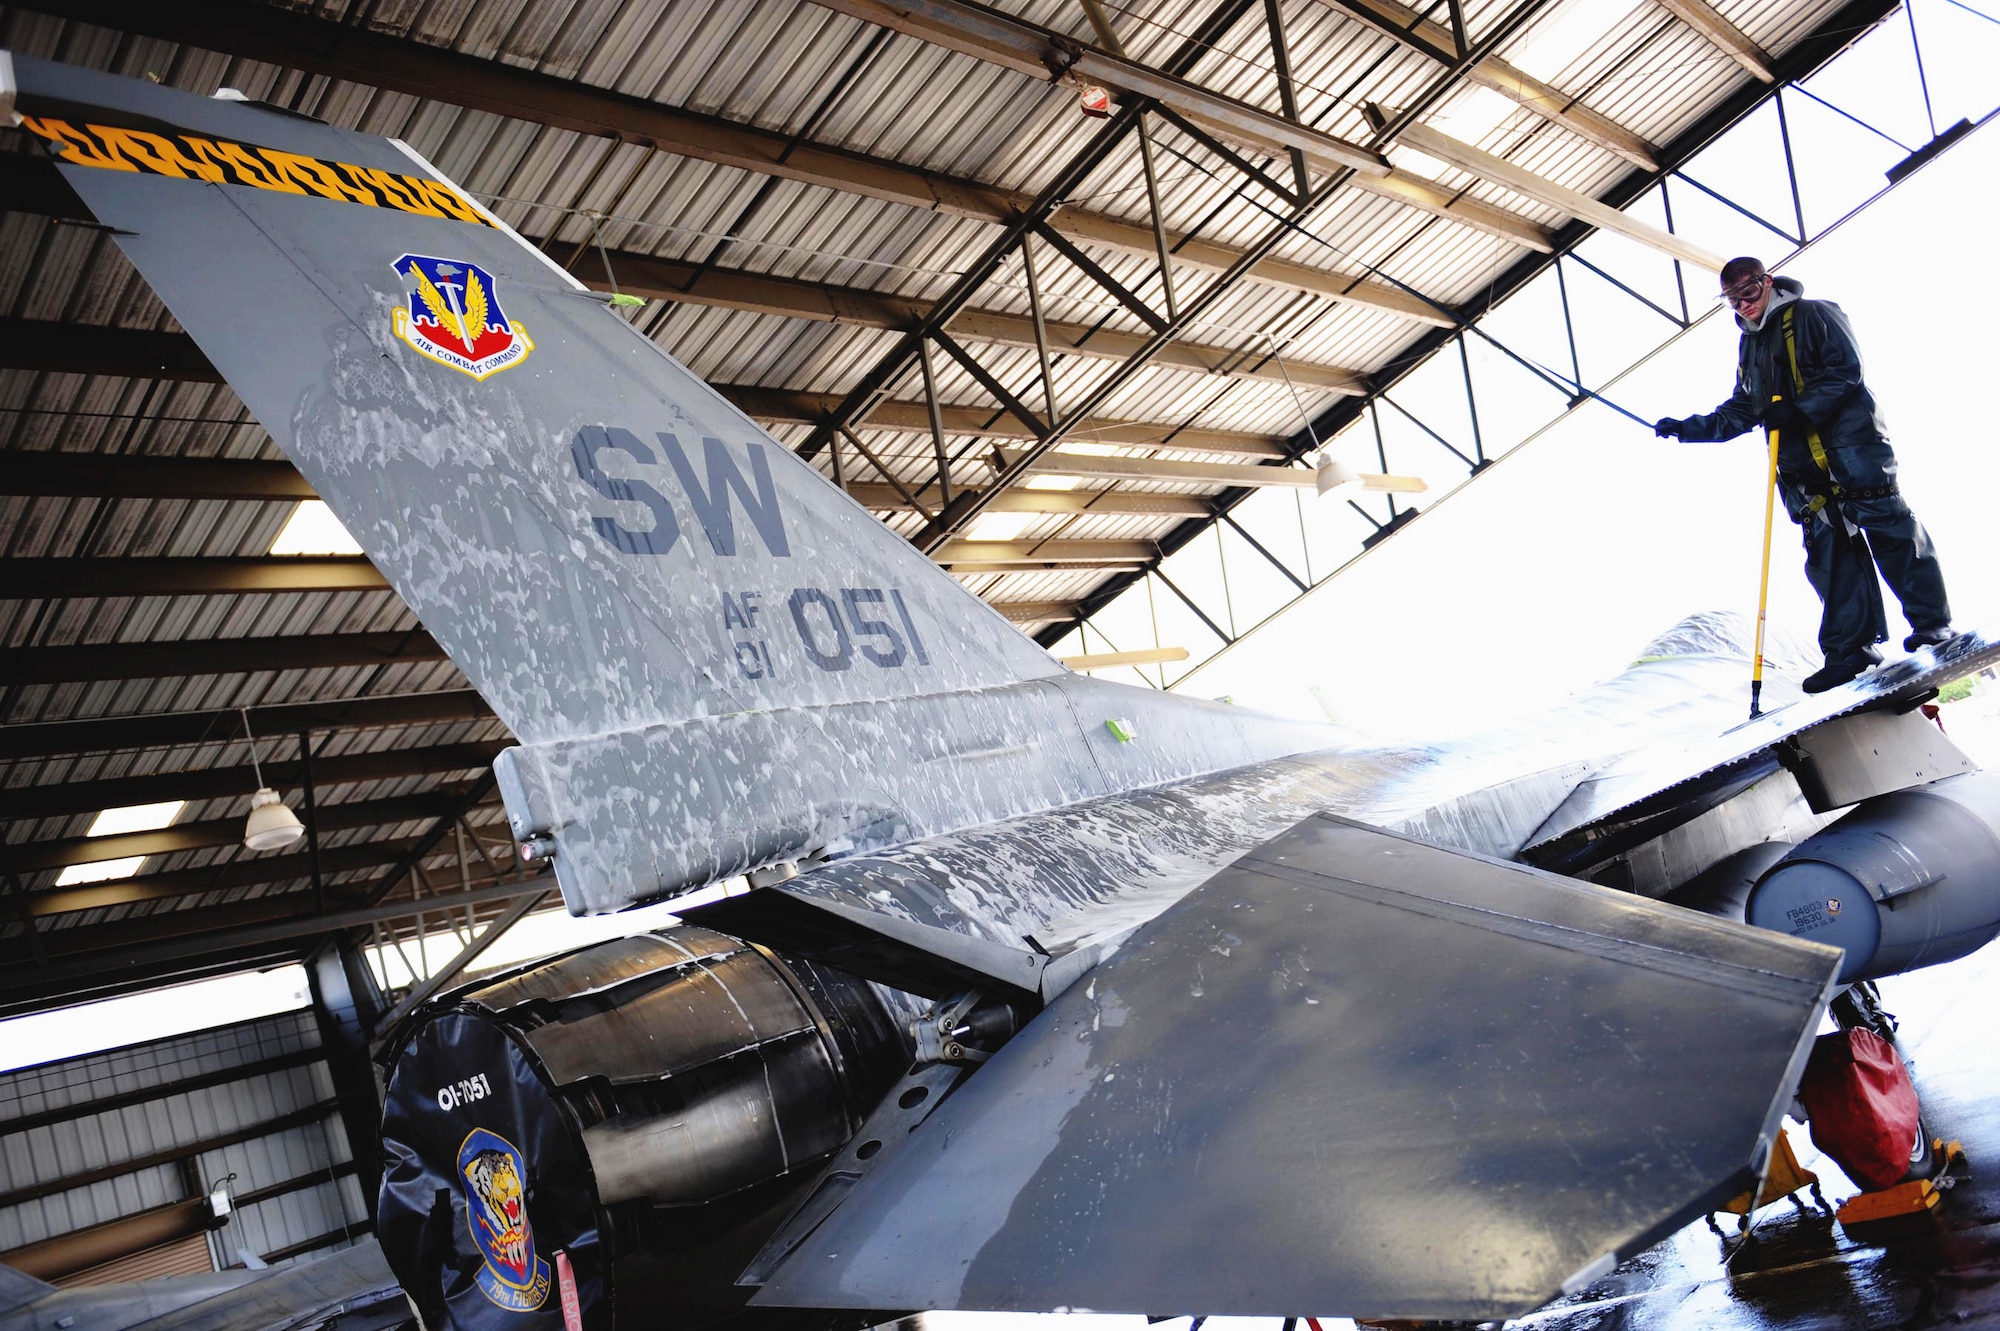 Contract Wars - USEC operators cleaning up hangar